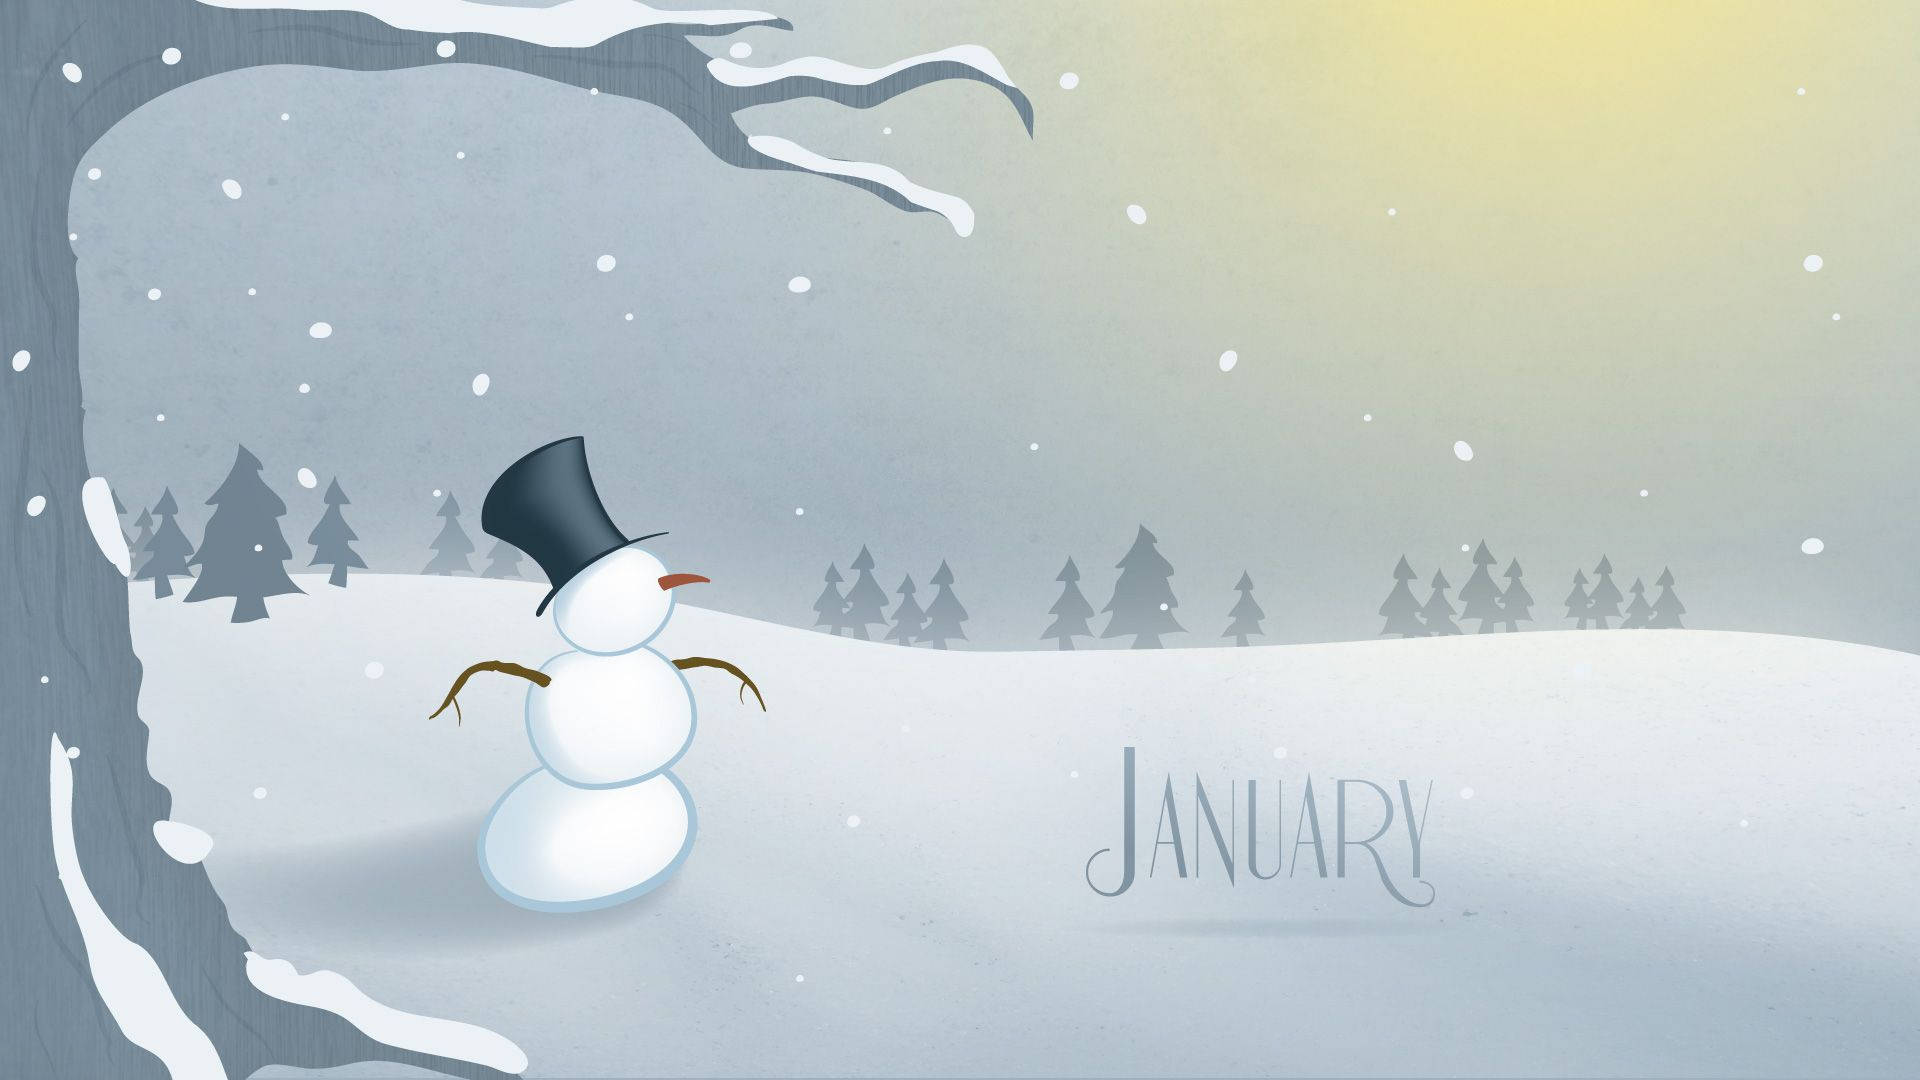 January Snowman Cartoon Background